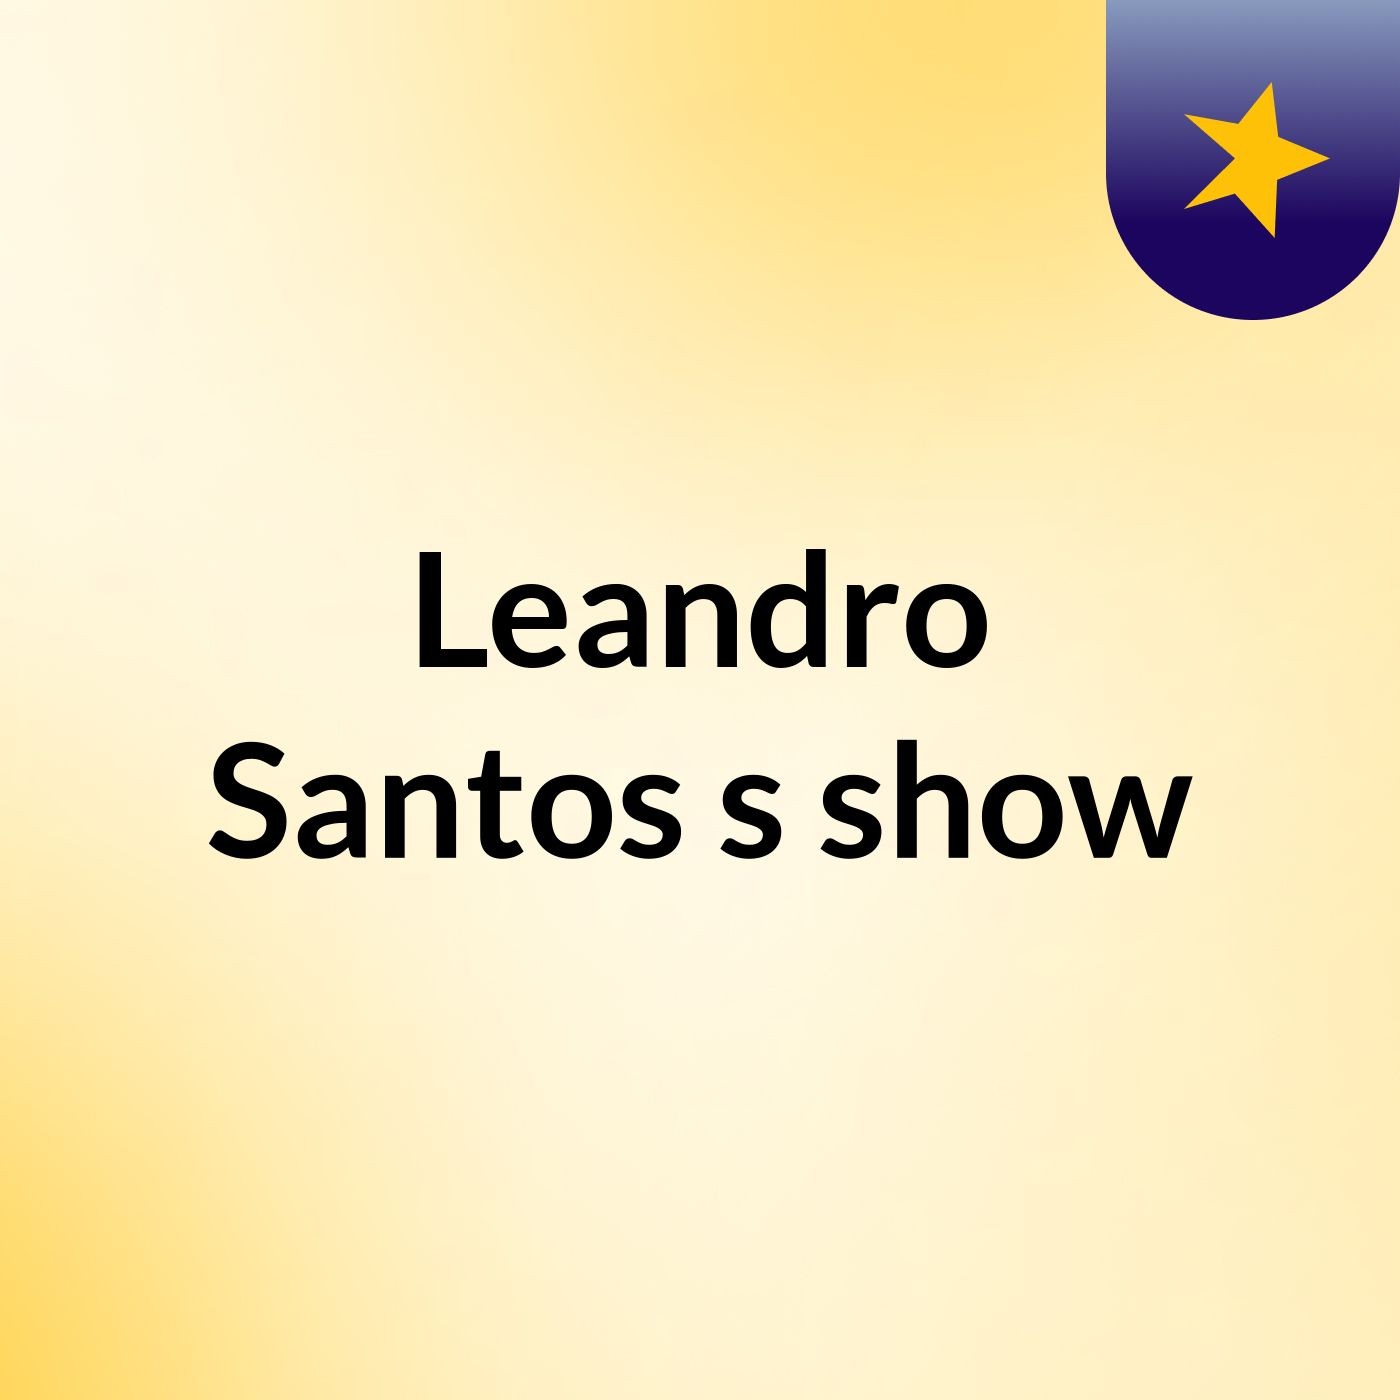 Leandro Santos's show